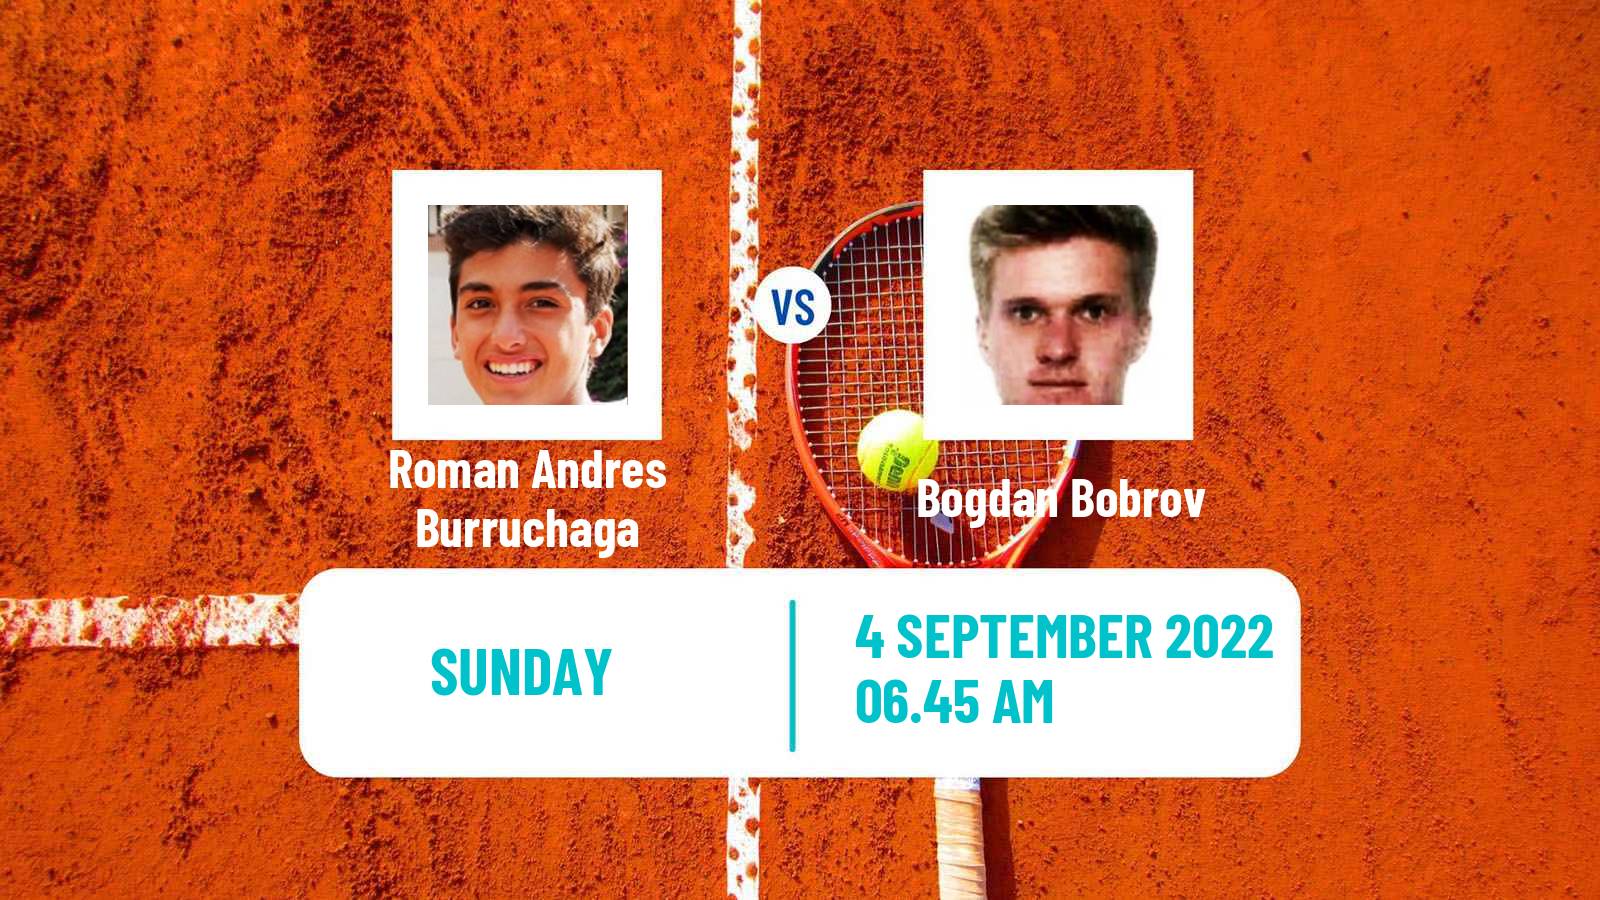 Tennis ATP Challenger Roman Andres Burruchaga - Bogdan Bobrov